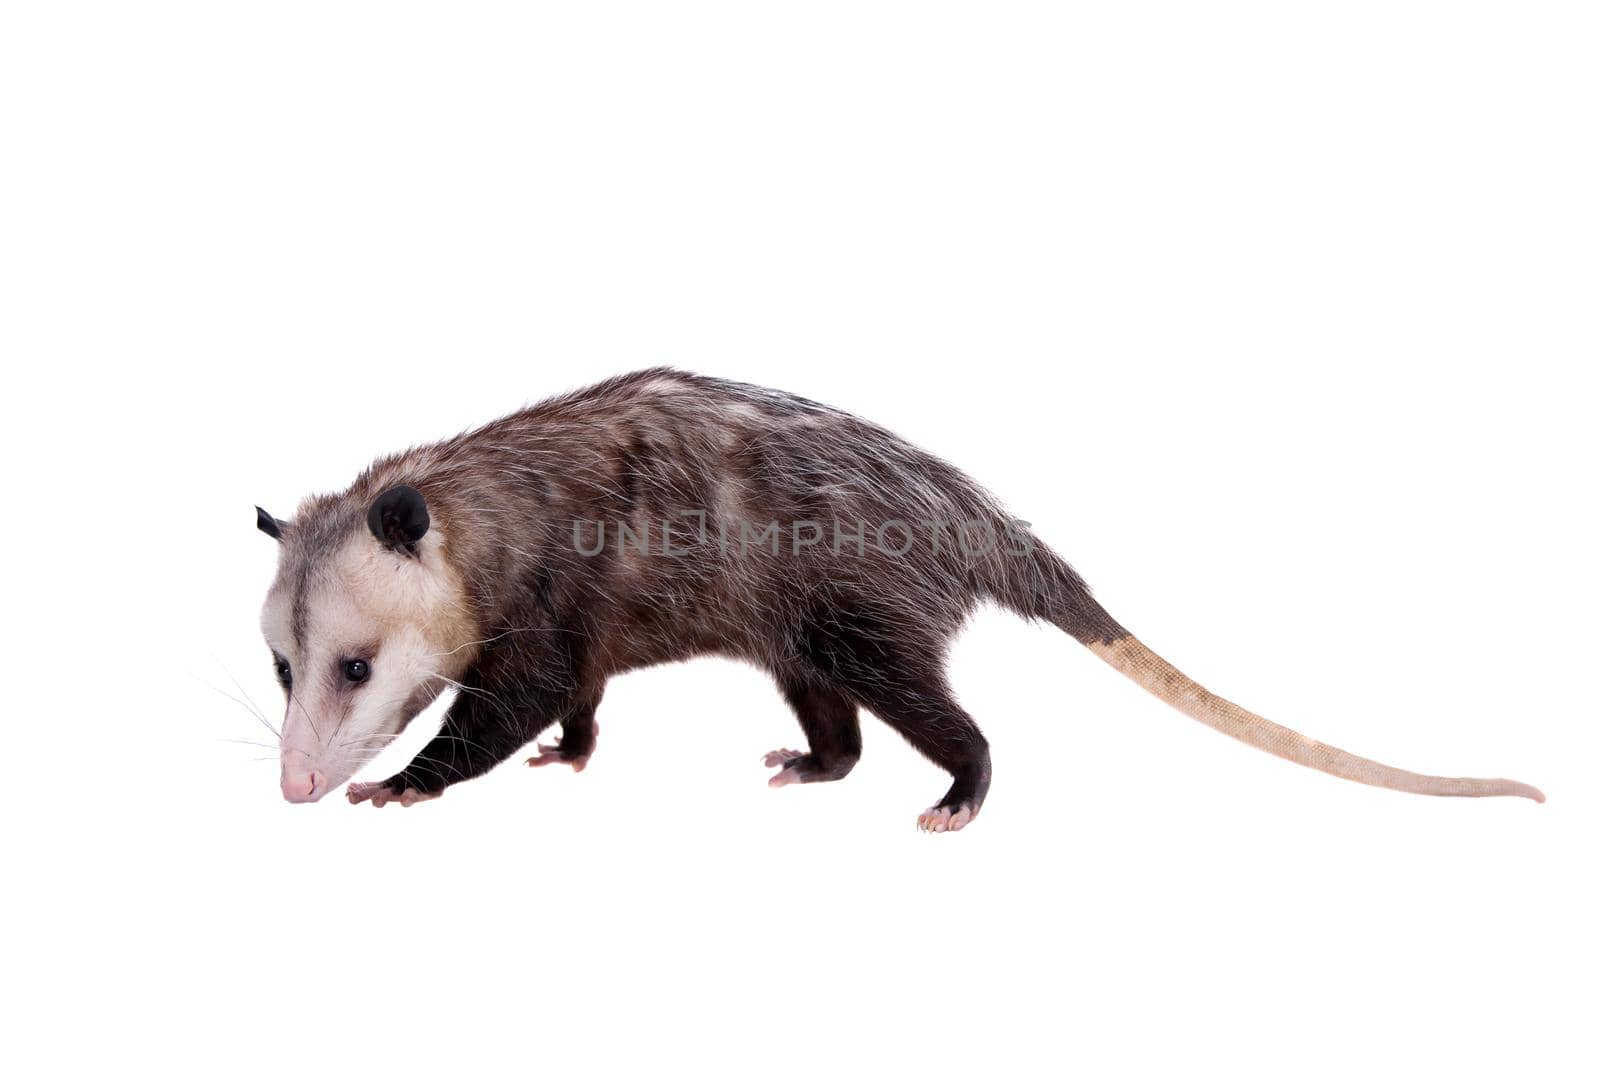 The Virginia opossum, Didelphis virginiana, on white by RosaJay